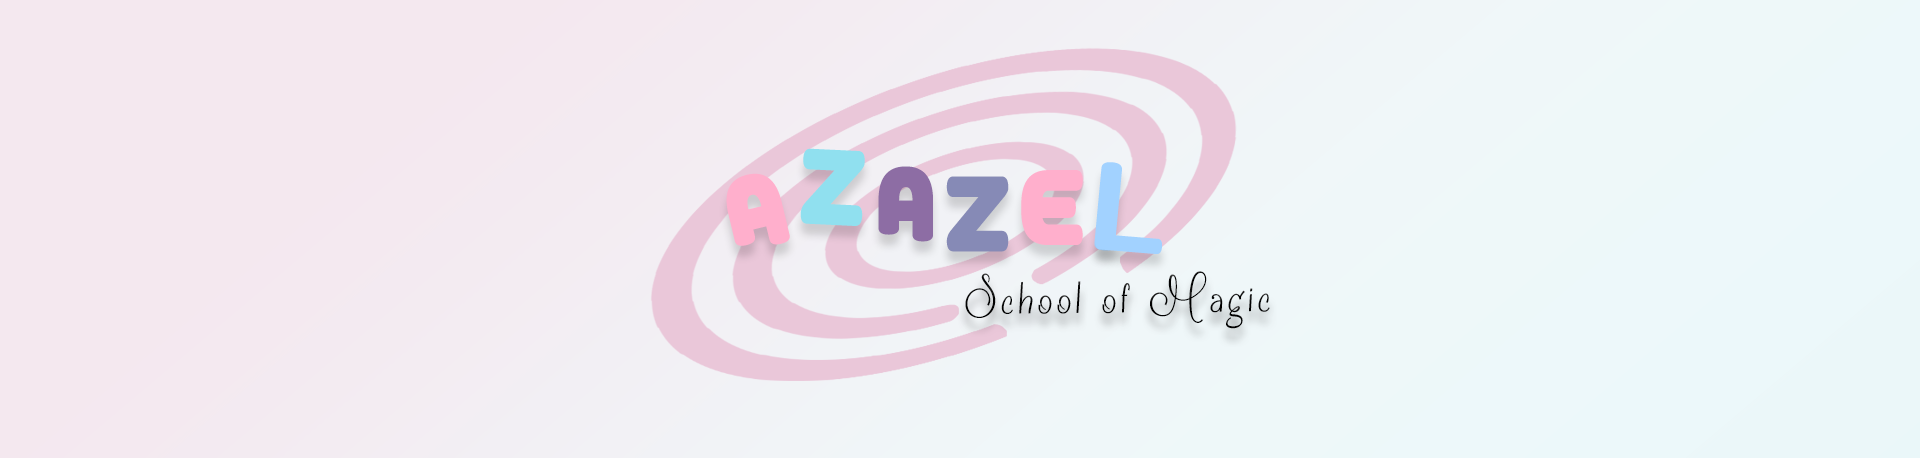 Azazel School of Magic